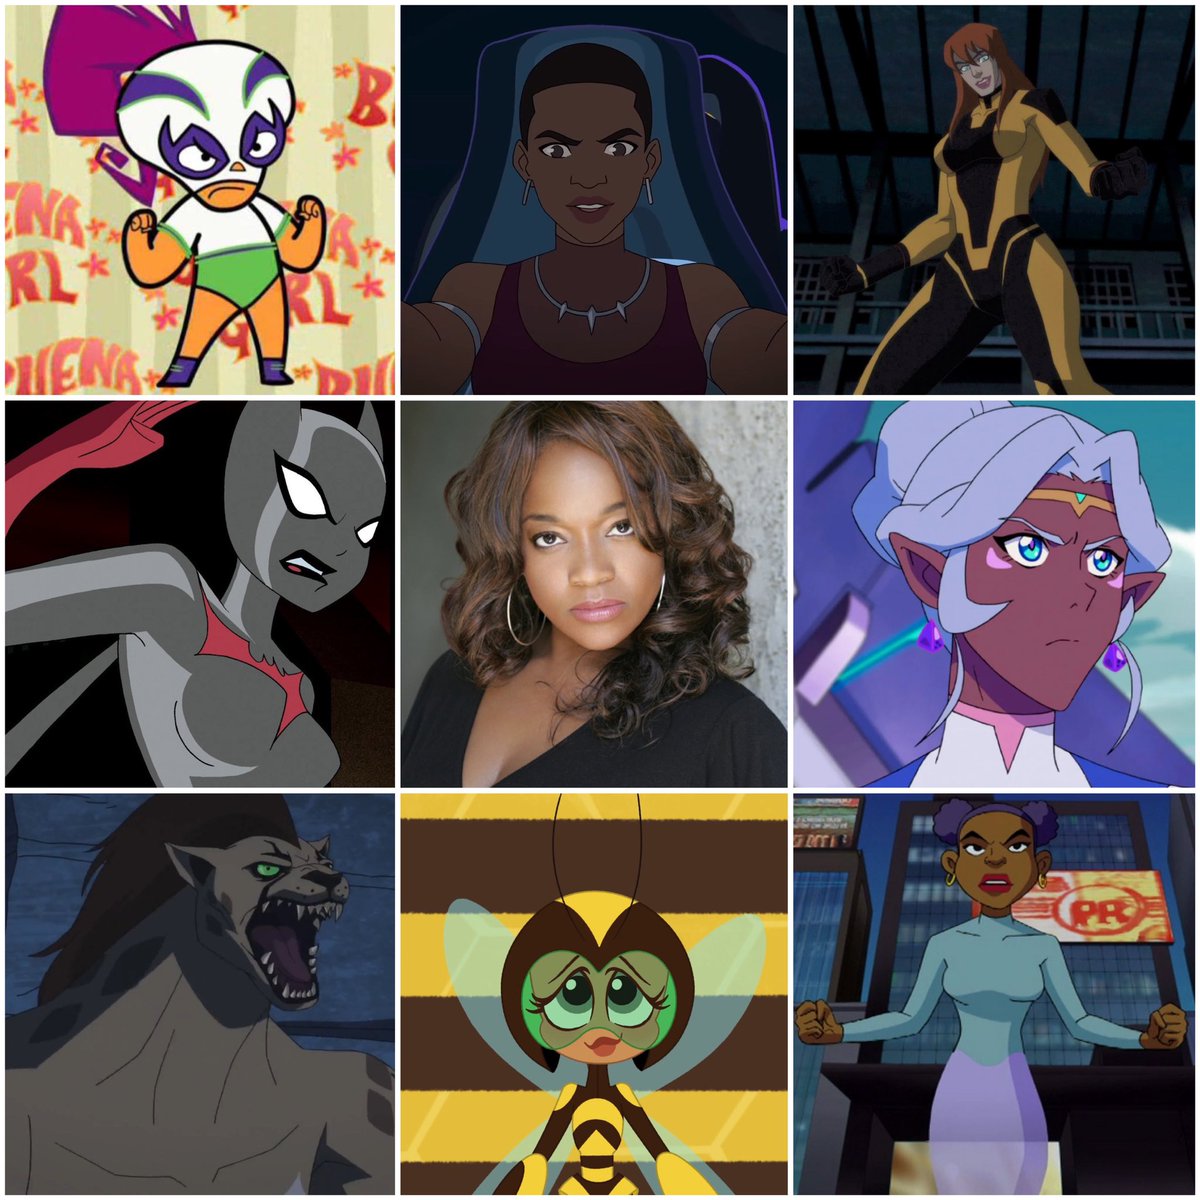 #KimberlyBrooks is the voice behind several #DC characters like #Bumblebee 🐝 #Batwoman 🦇 #Cheetah 🐆 #Giganta and Puff from #StaticShock⚡

@kimberlydbrooks #VoiceActing #AnimationIsNotAGenre #DiversityInAnimation #Diversity #DiversityMatters #DCSuperHeroGirls #Dreamworks